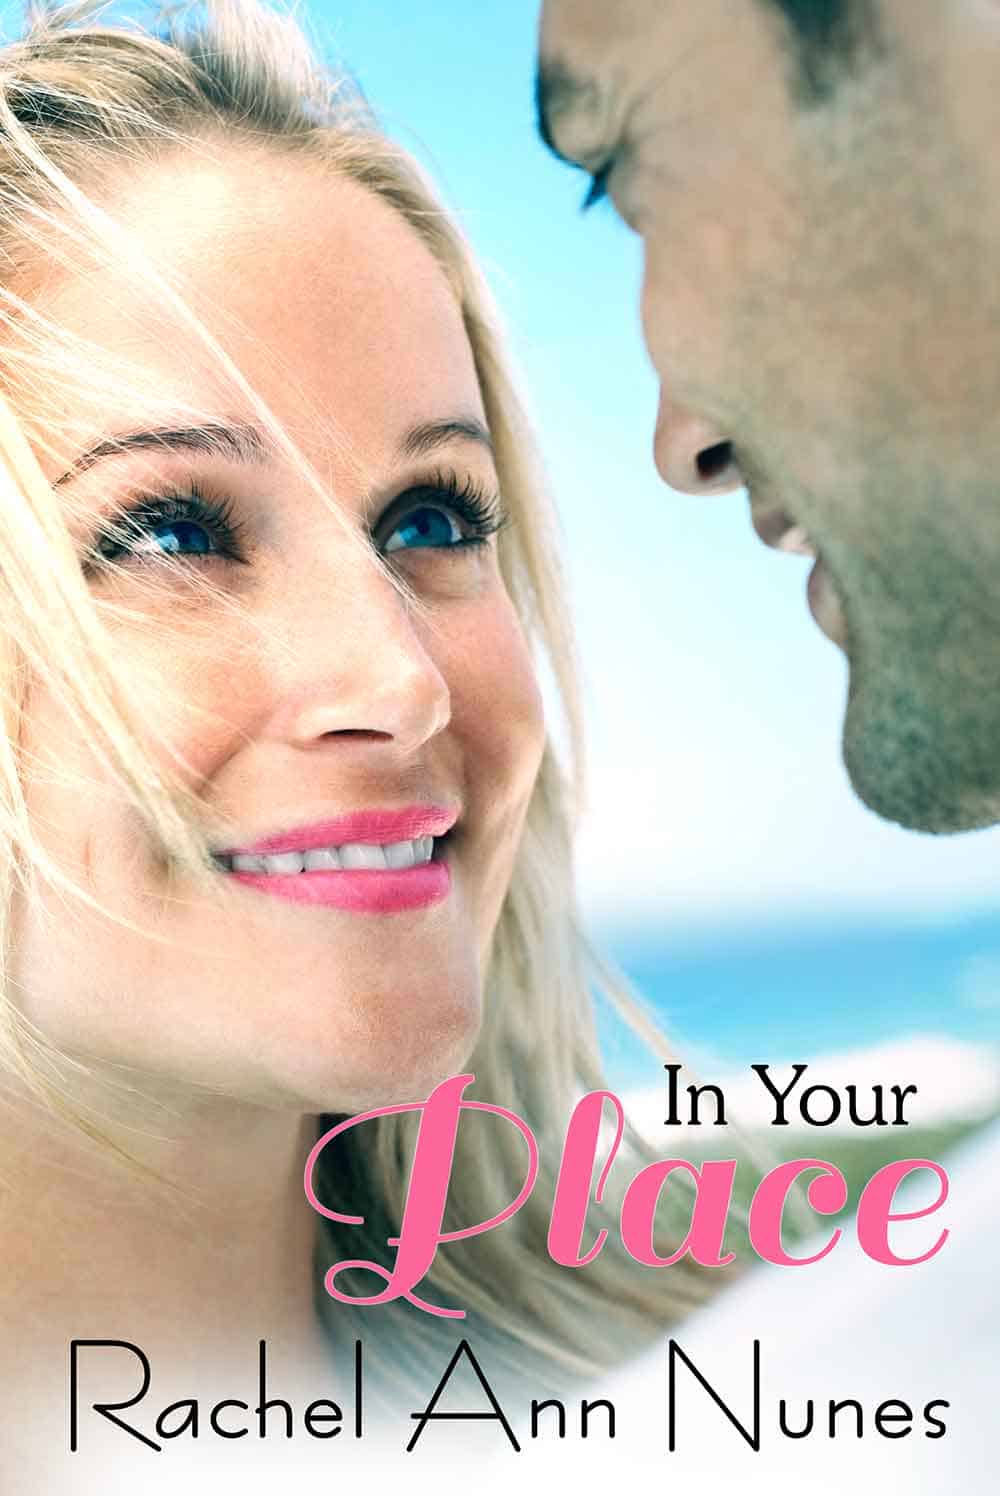 In Your Place by Rachel Ann Nunes